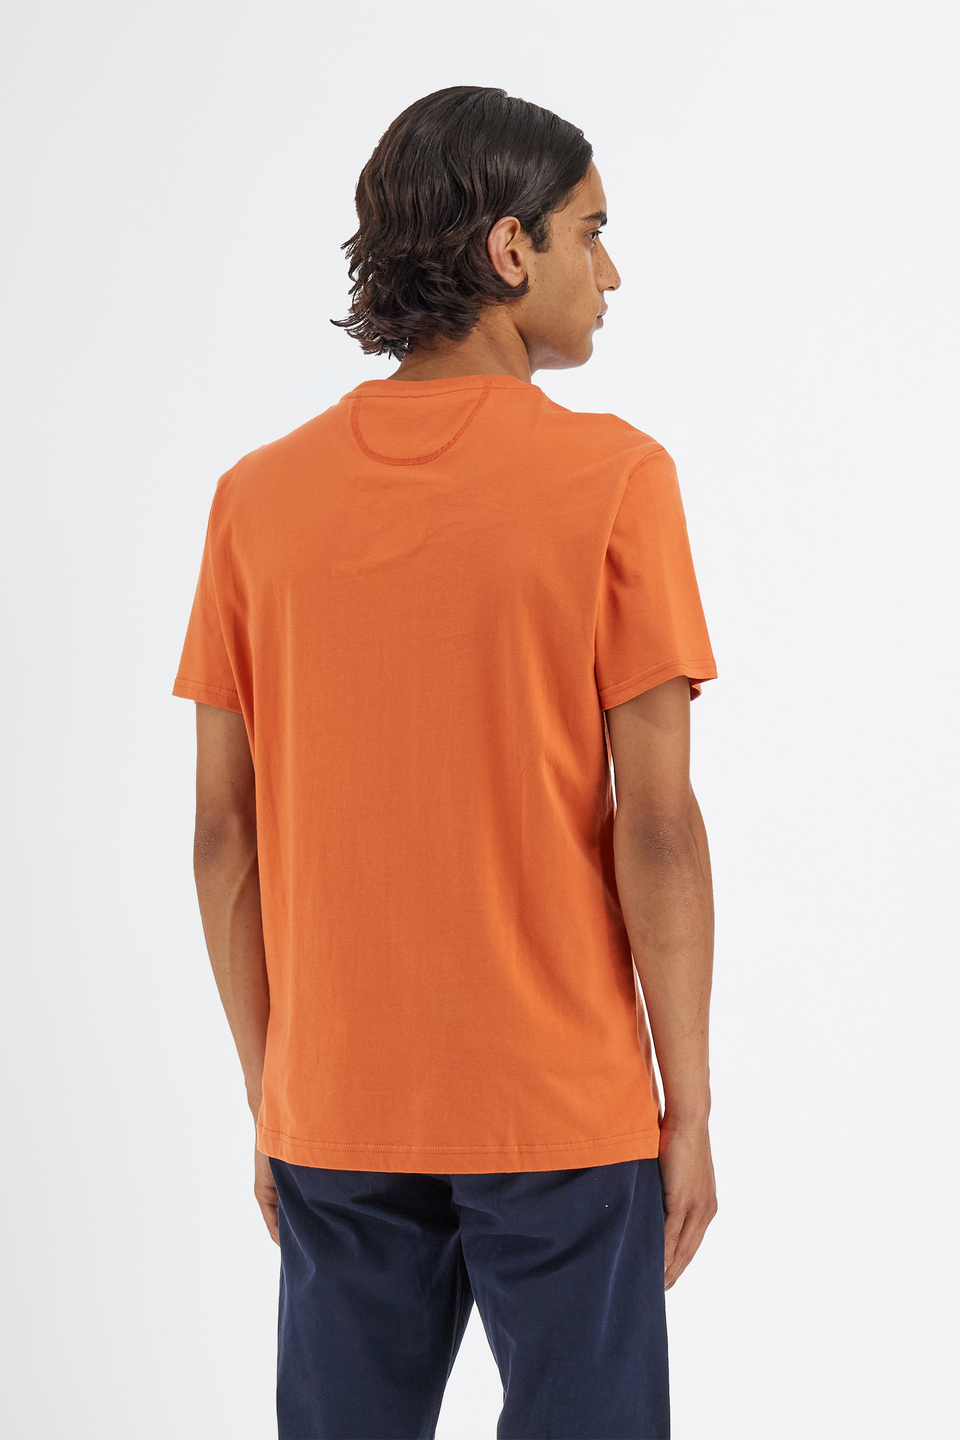 Men’s short-sleeved crew neck t-shirt in 100% regular fit cotton | La Martina - Official Online Shop